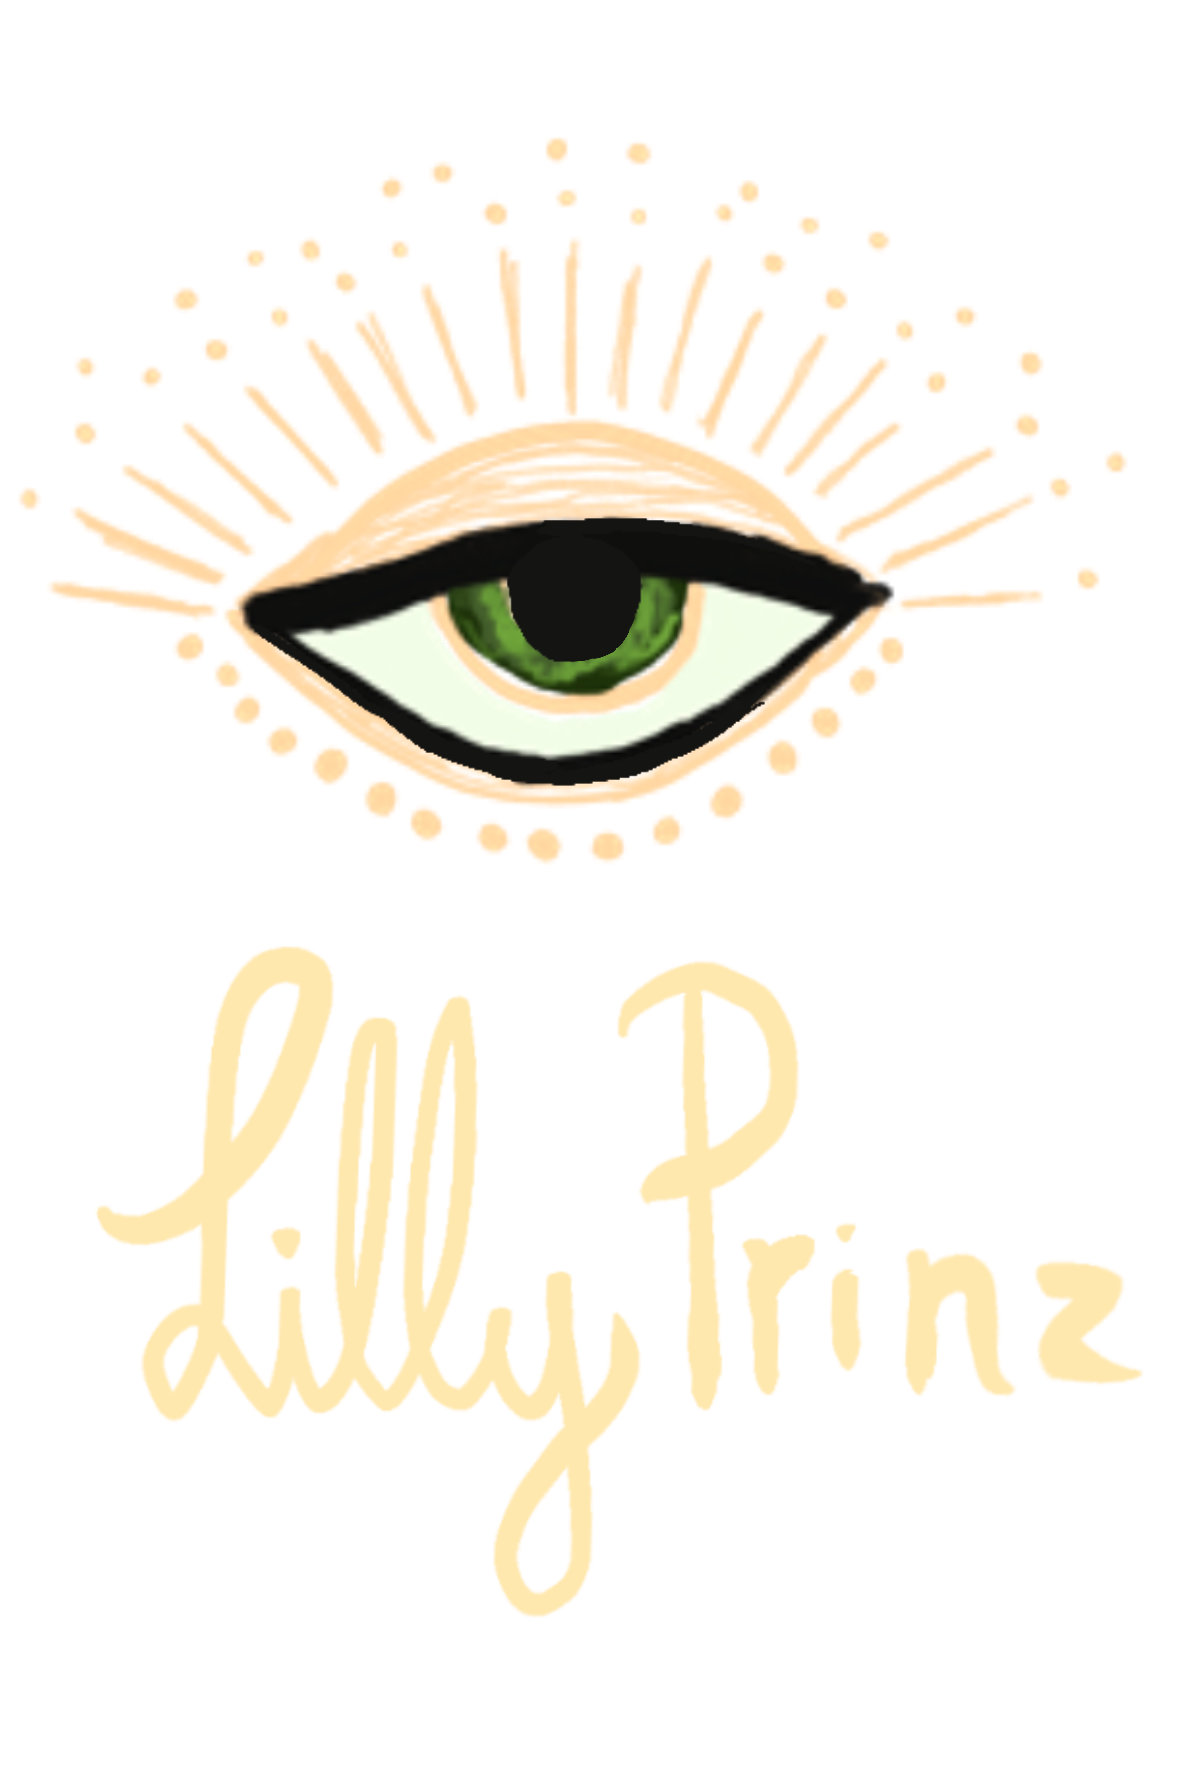 Lilly Prinz